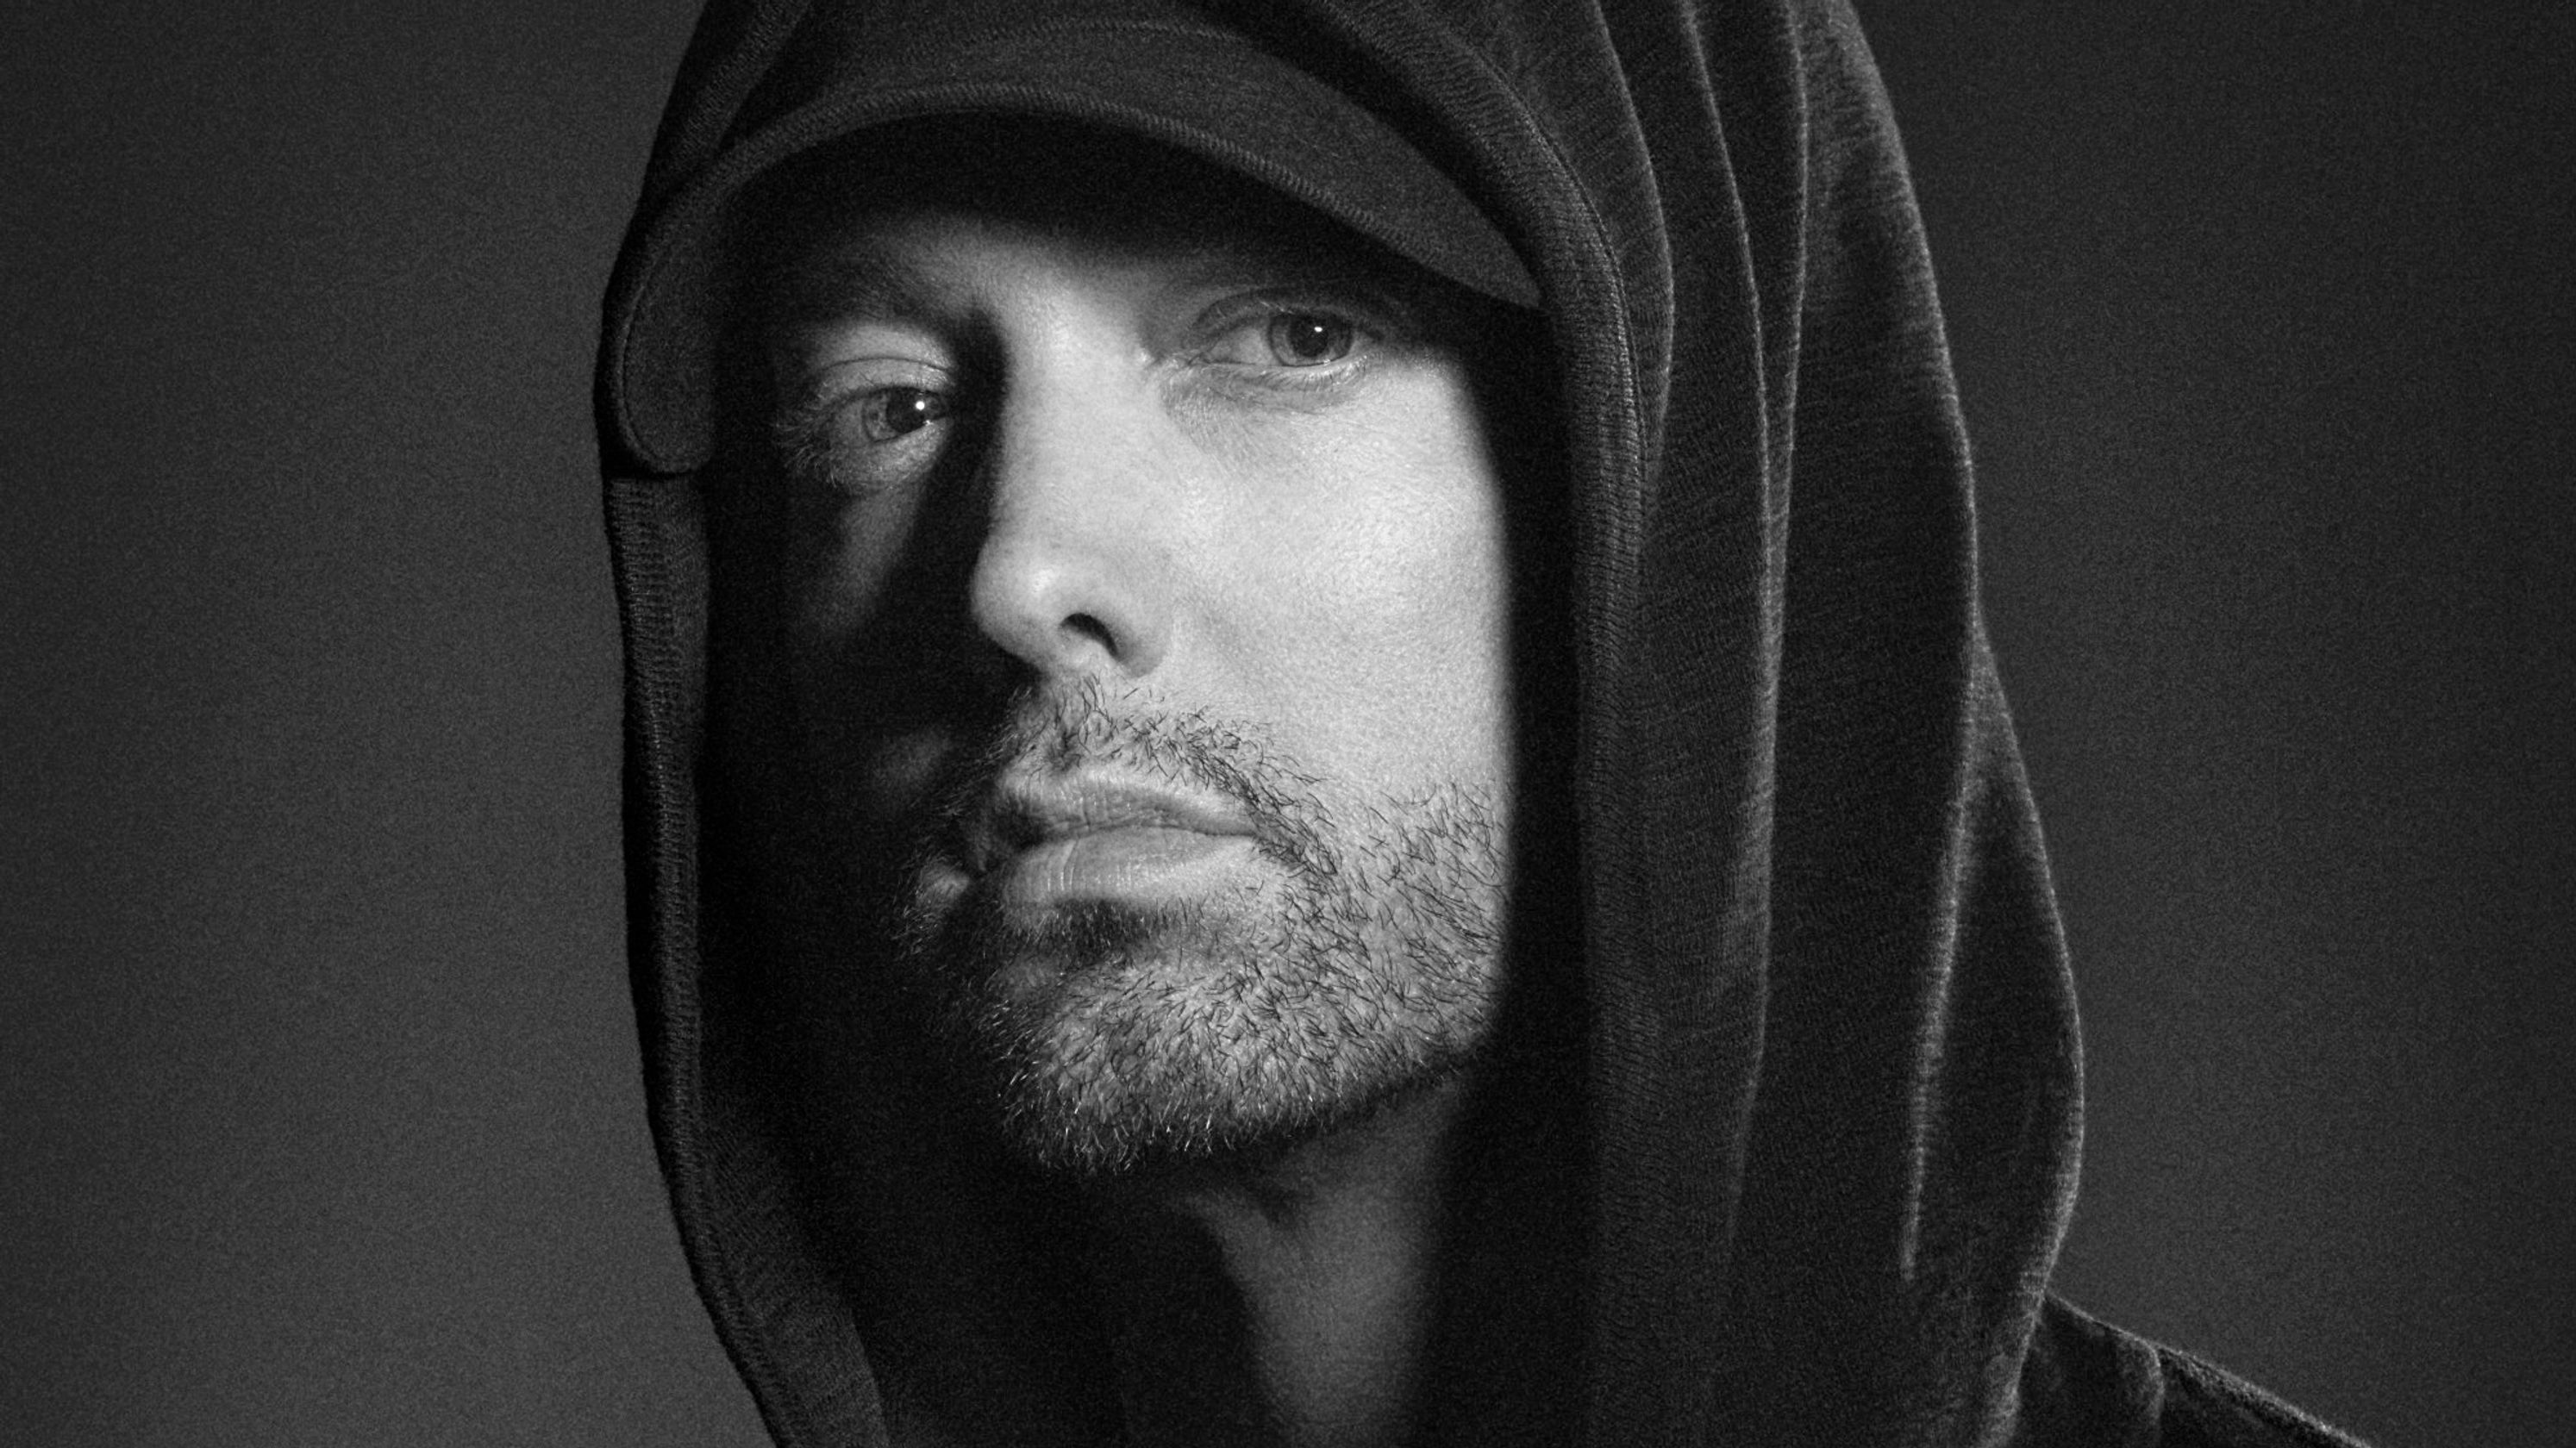 Eminem Biography